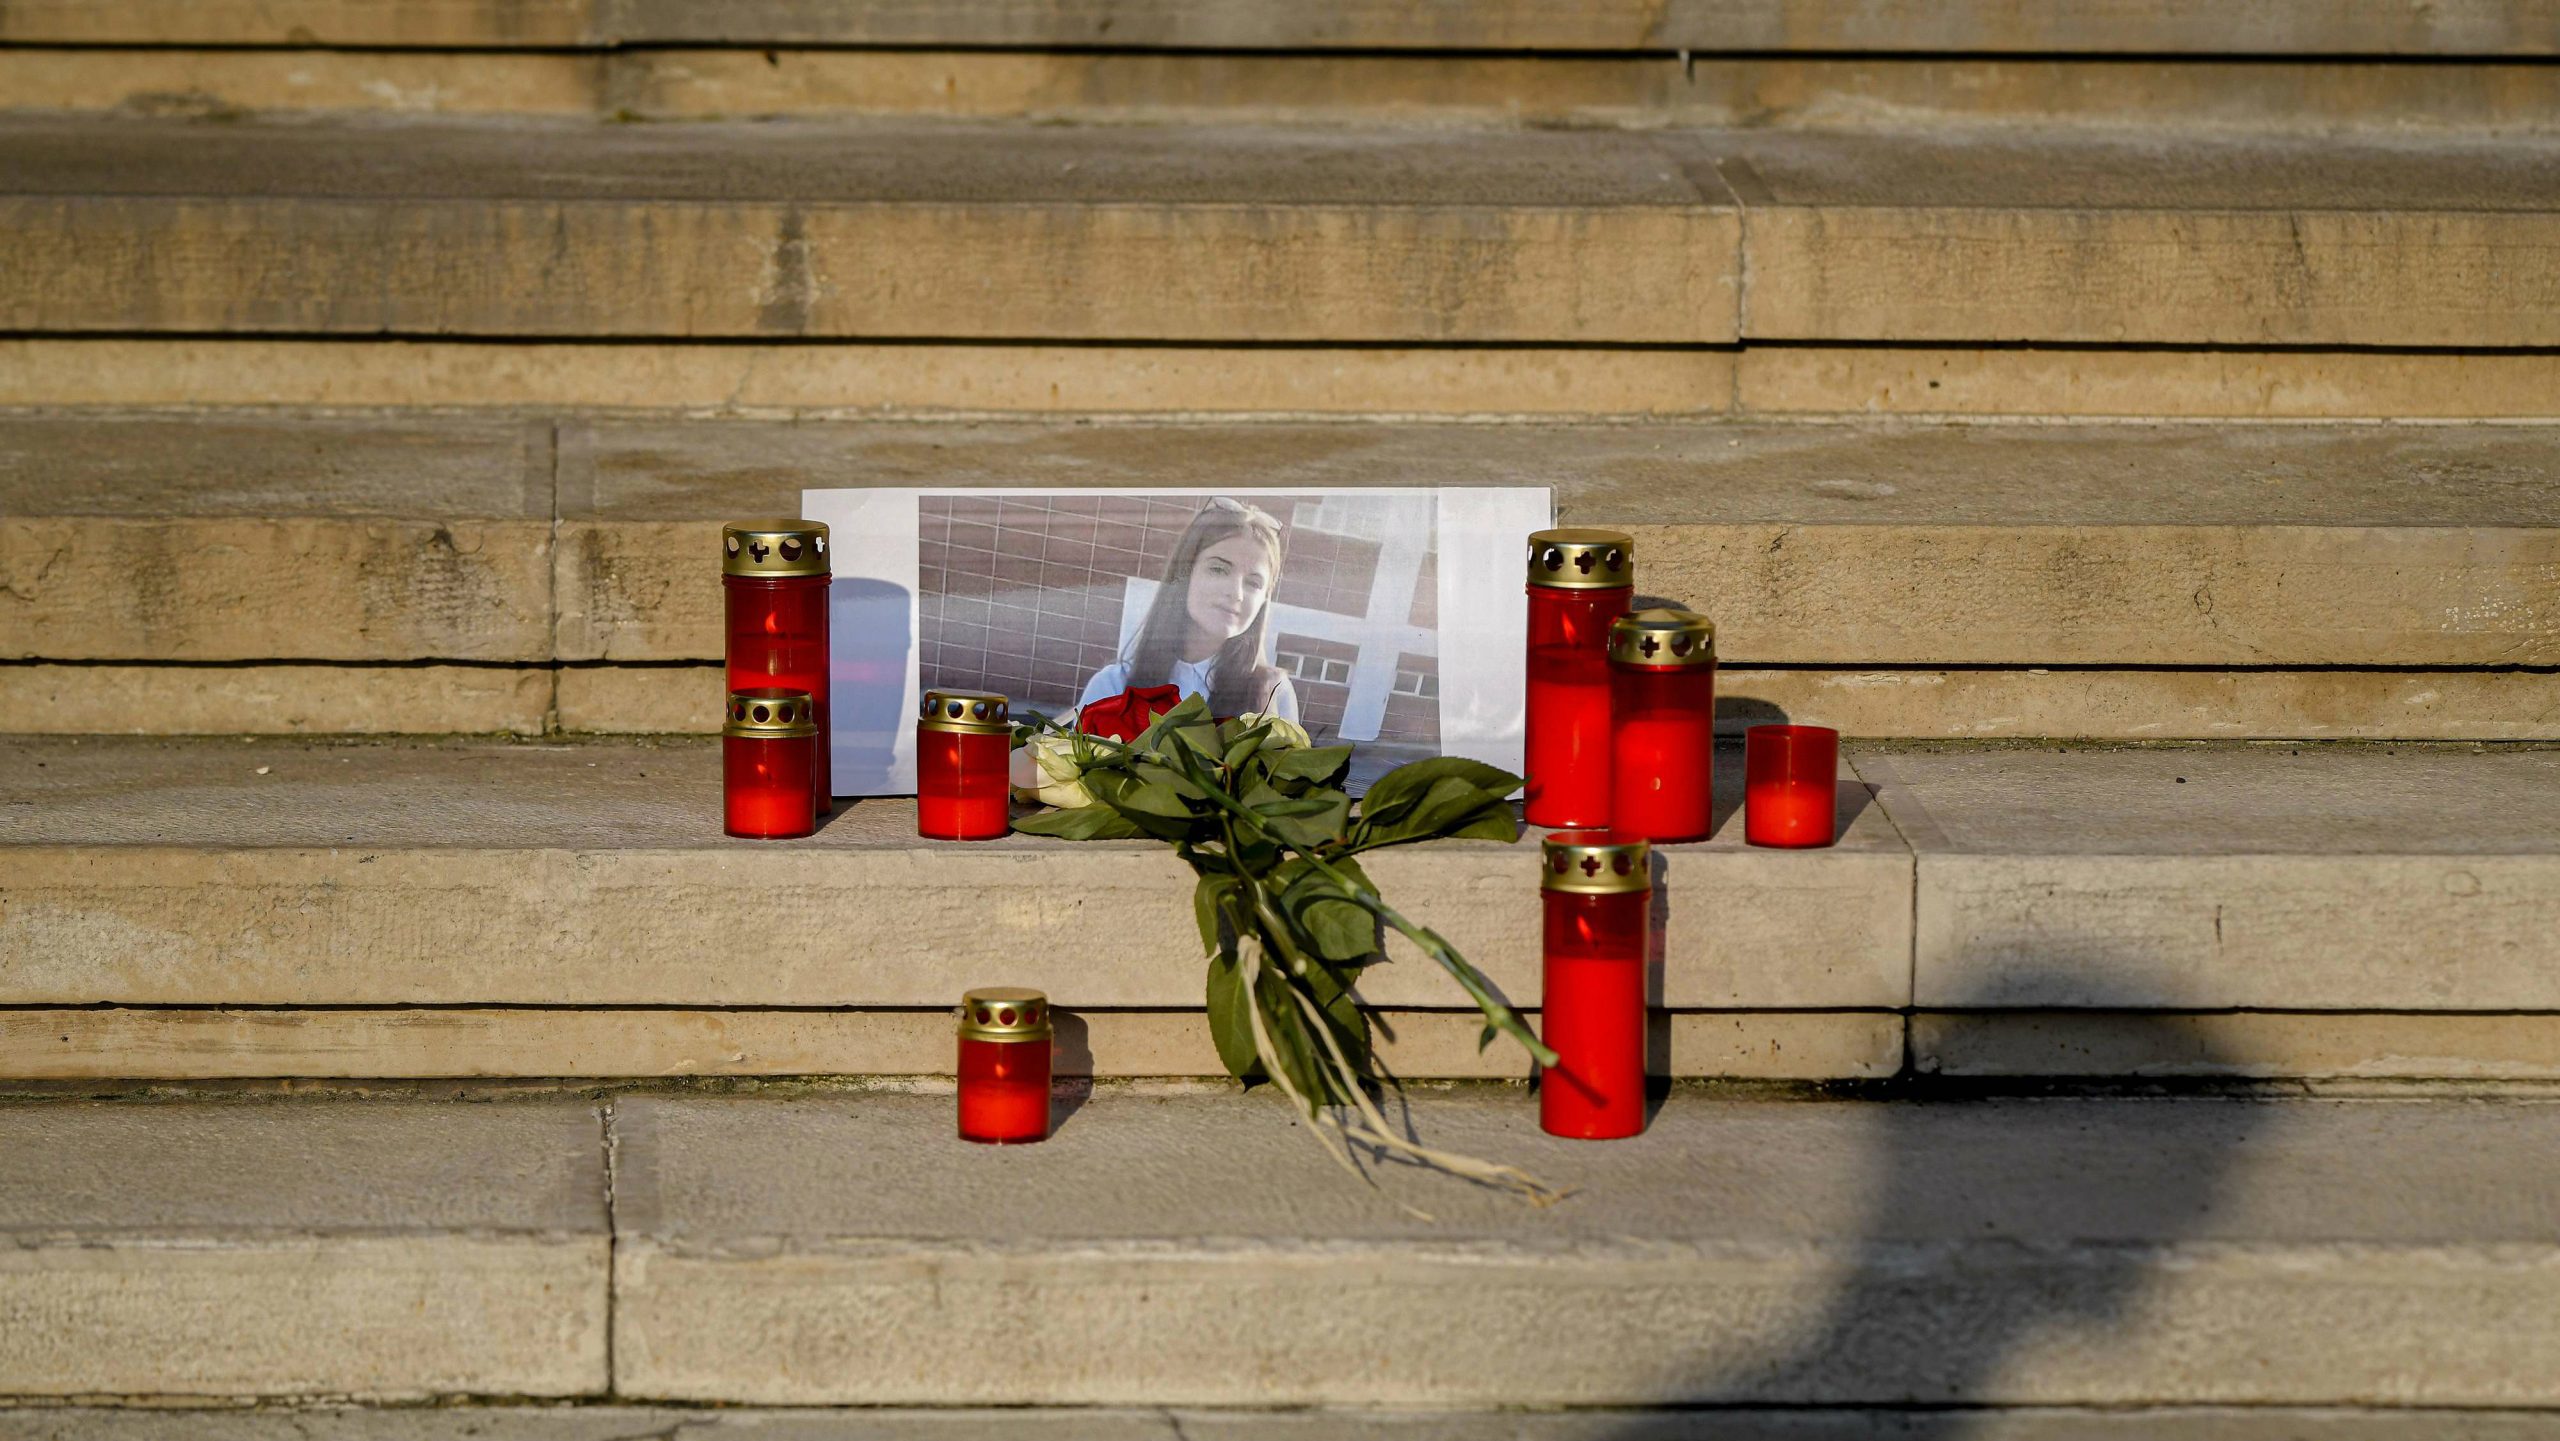 Premijerka Rumunije za strože kazne za najteže zločine posle ubistva devojčice 1